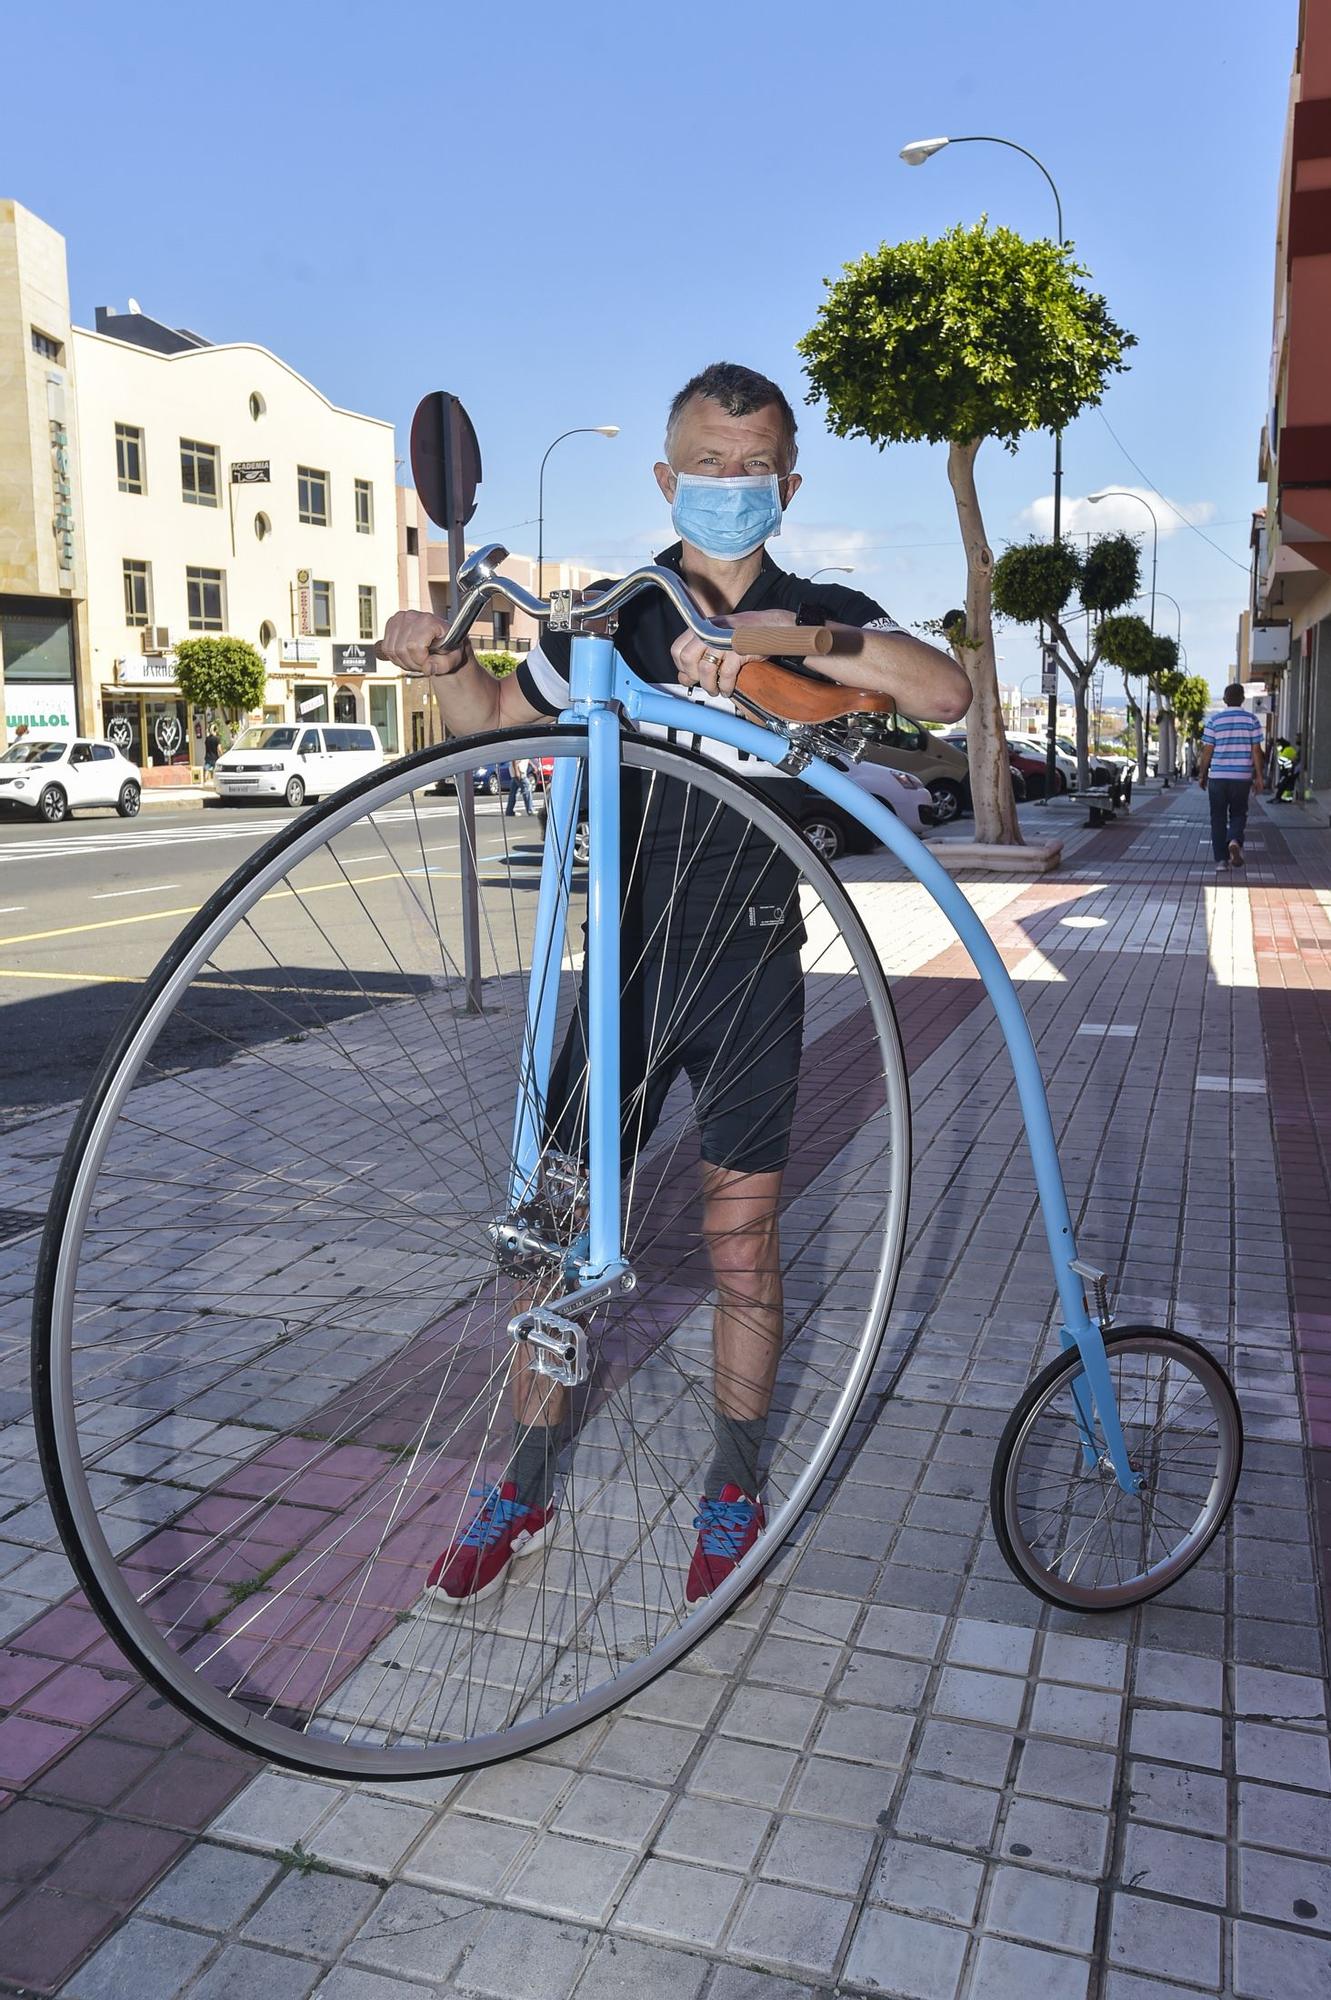 Pelle Kippel, turista sueco, con su biciclo